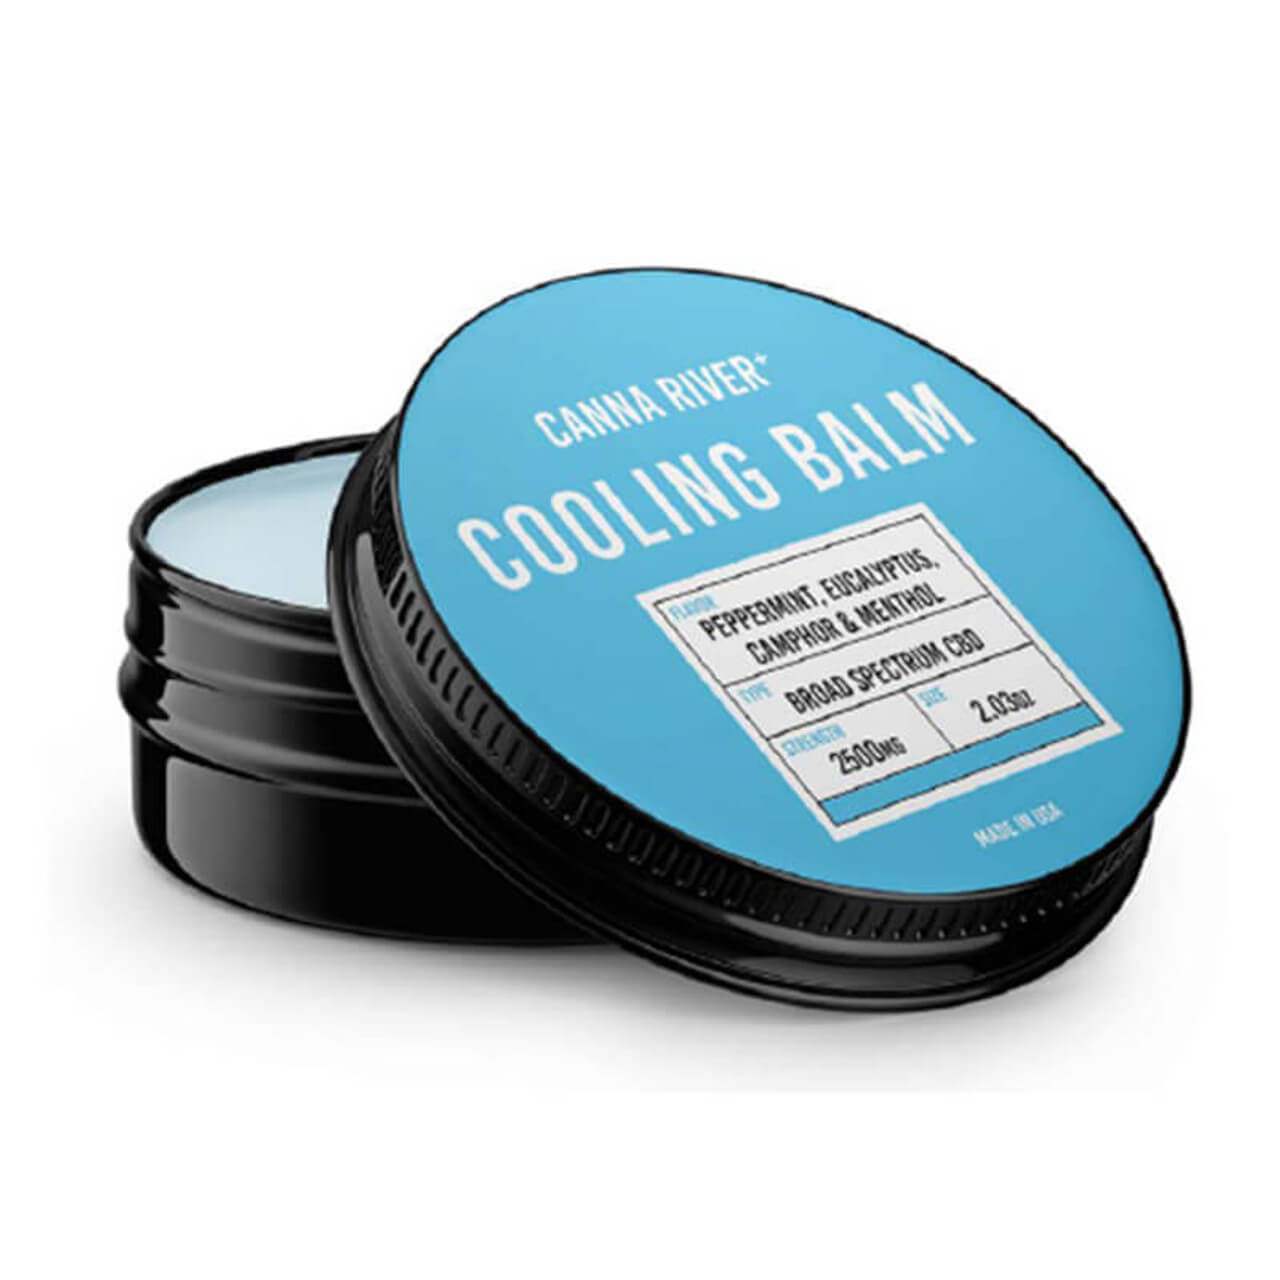 Cooling Balm 2500mg logo